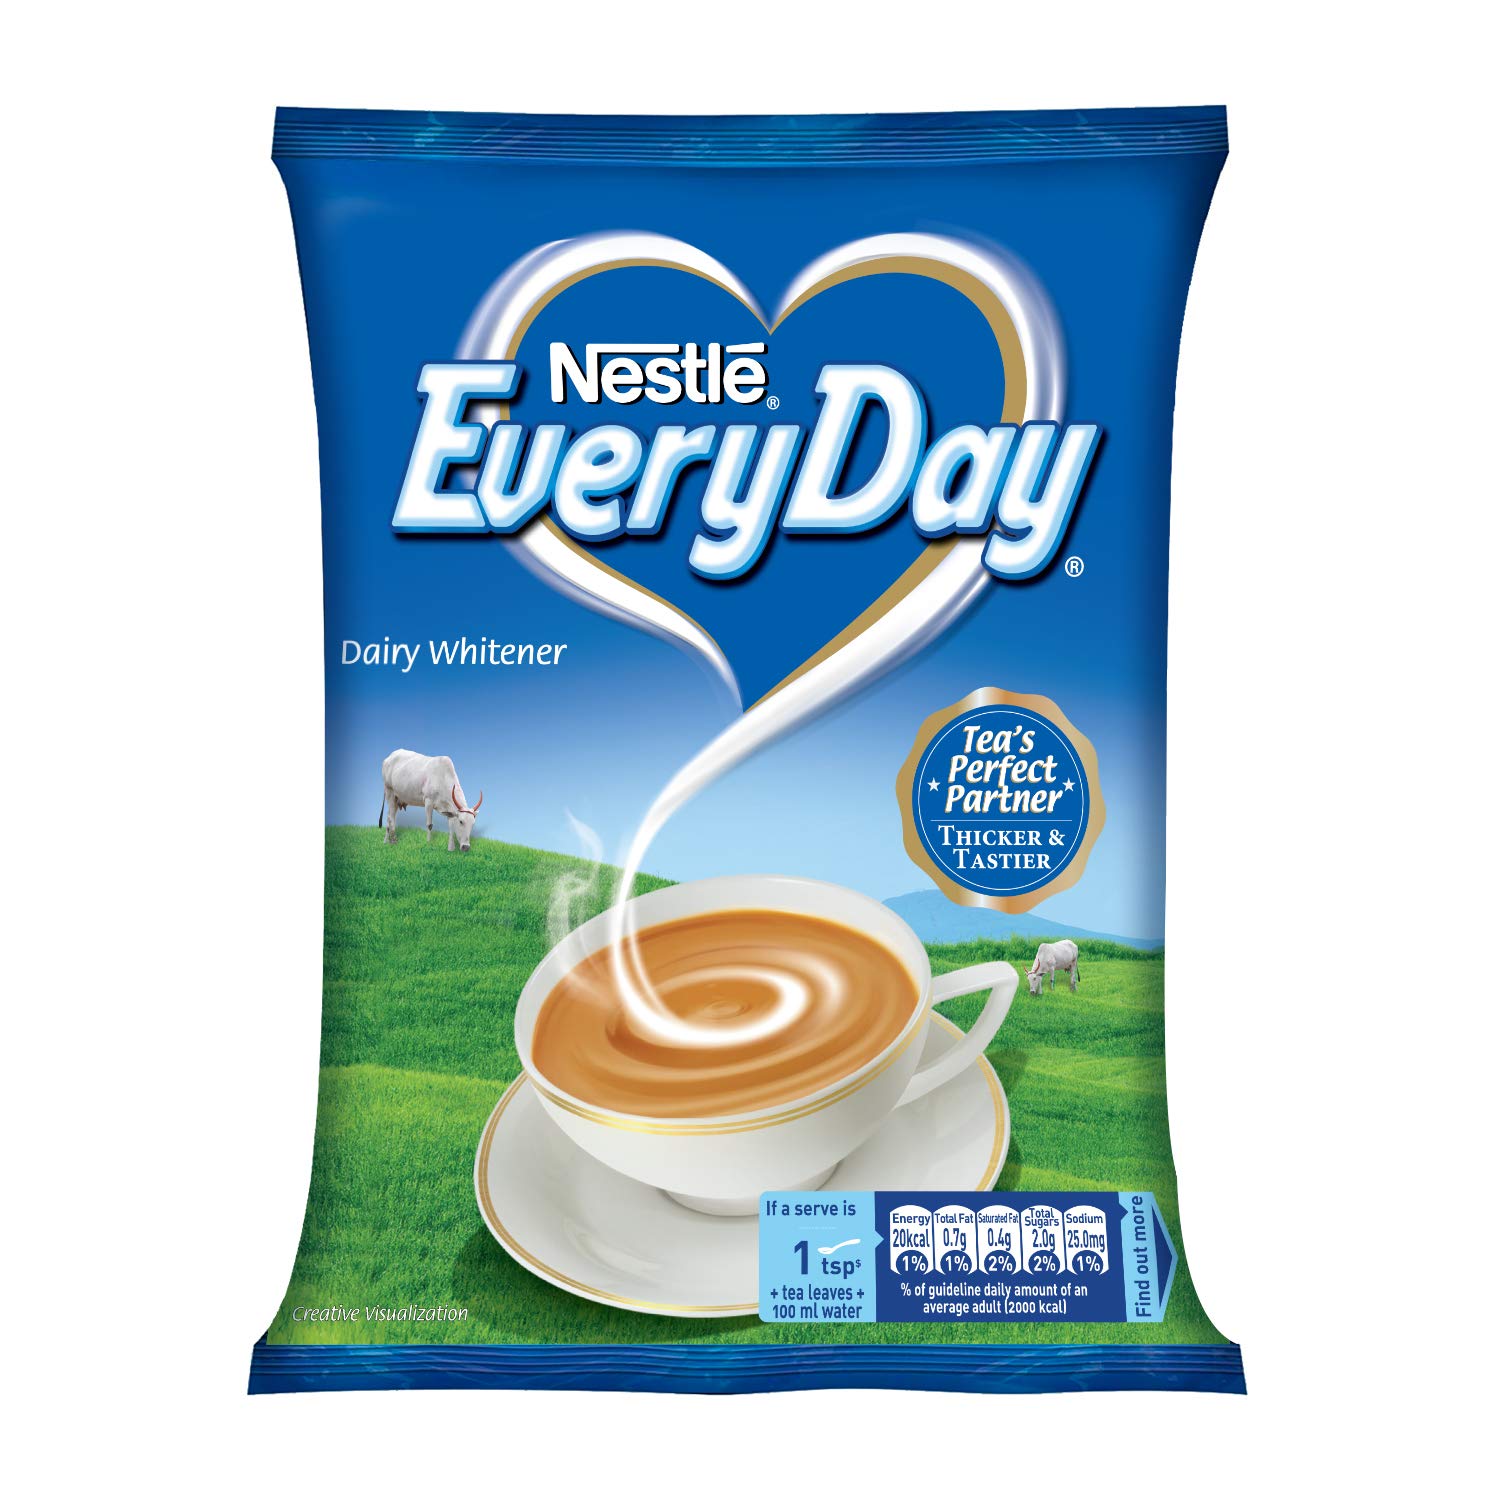 Nestle Everyday dairy whitener